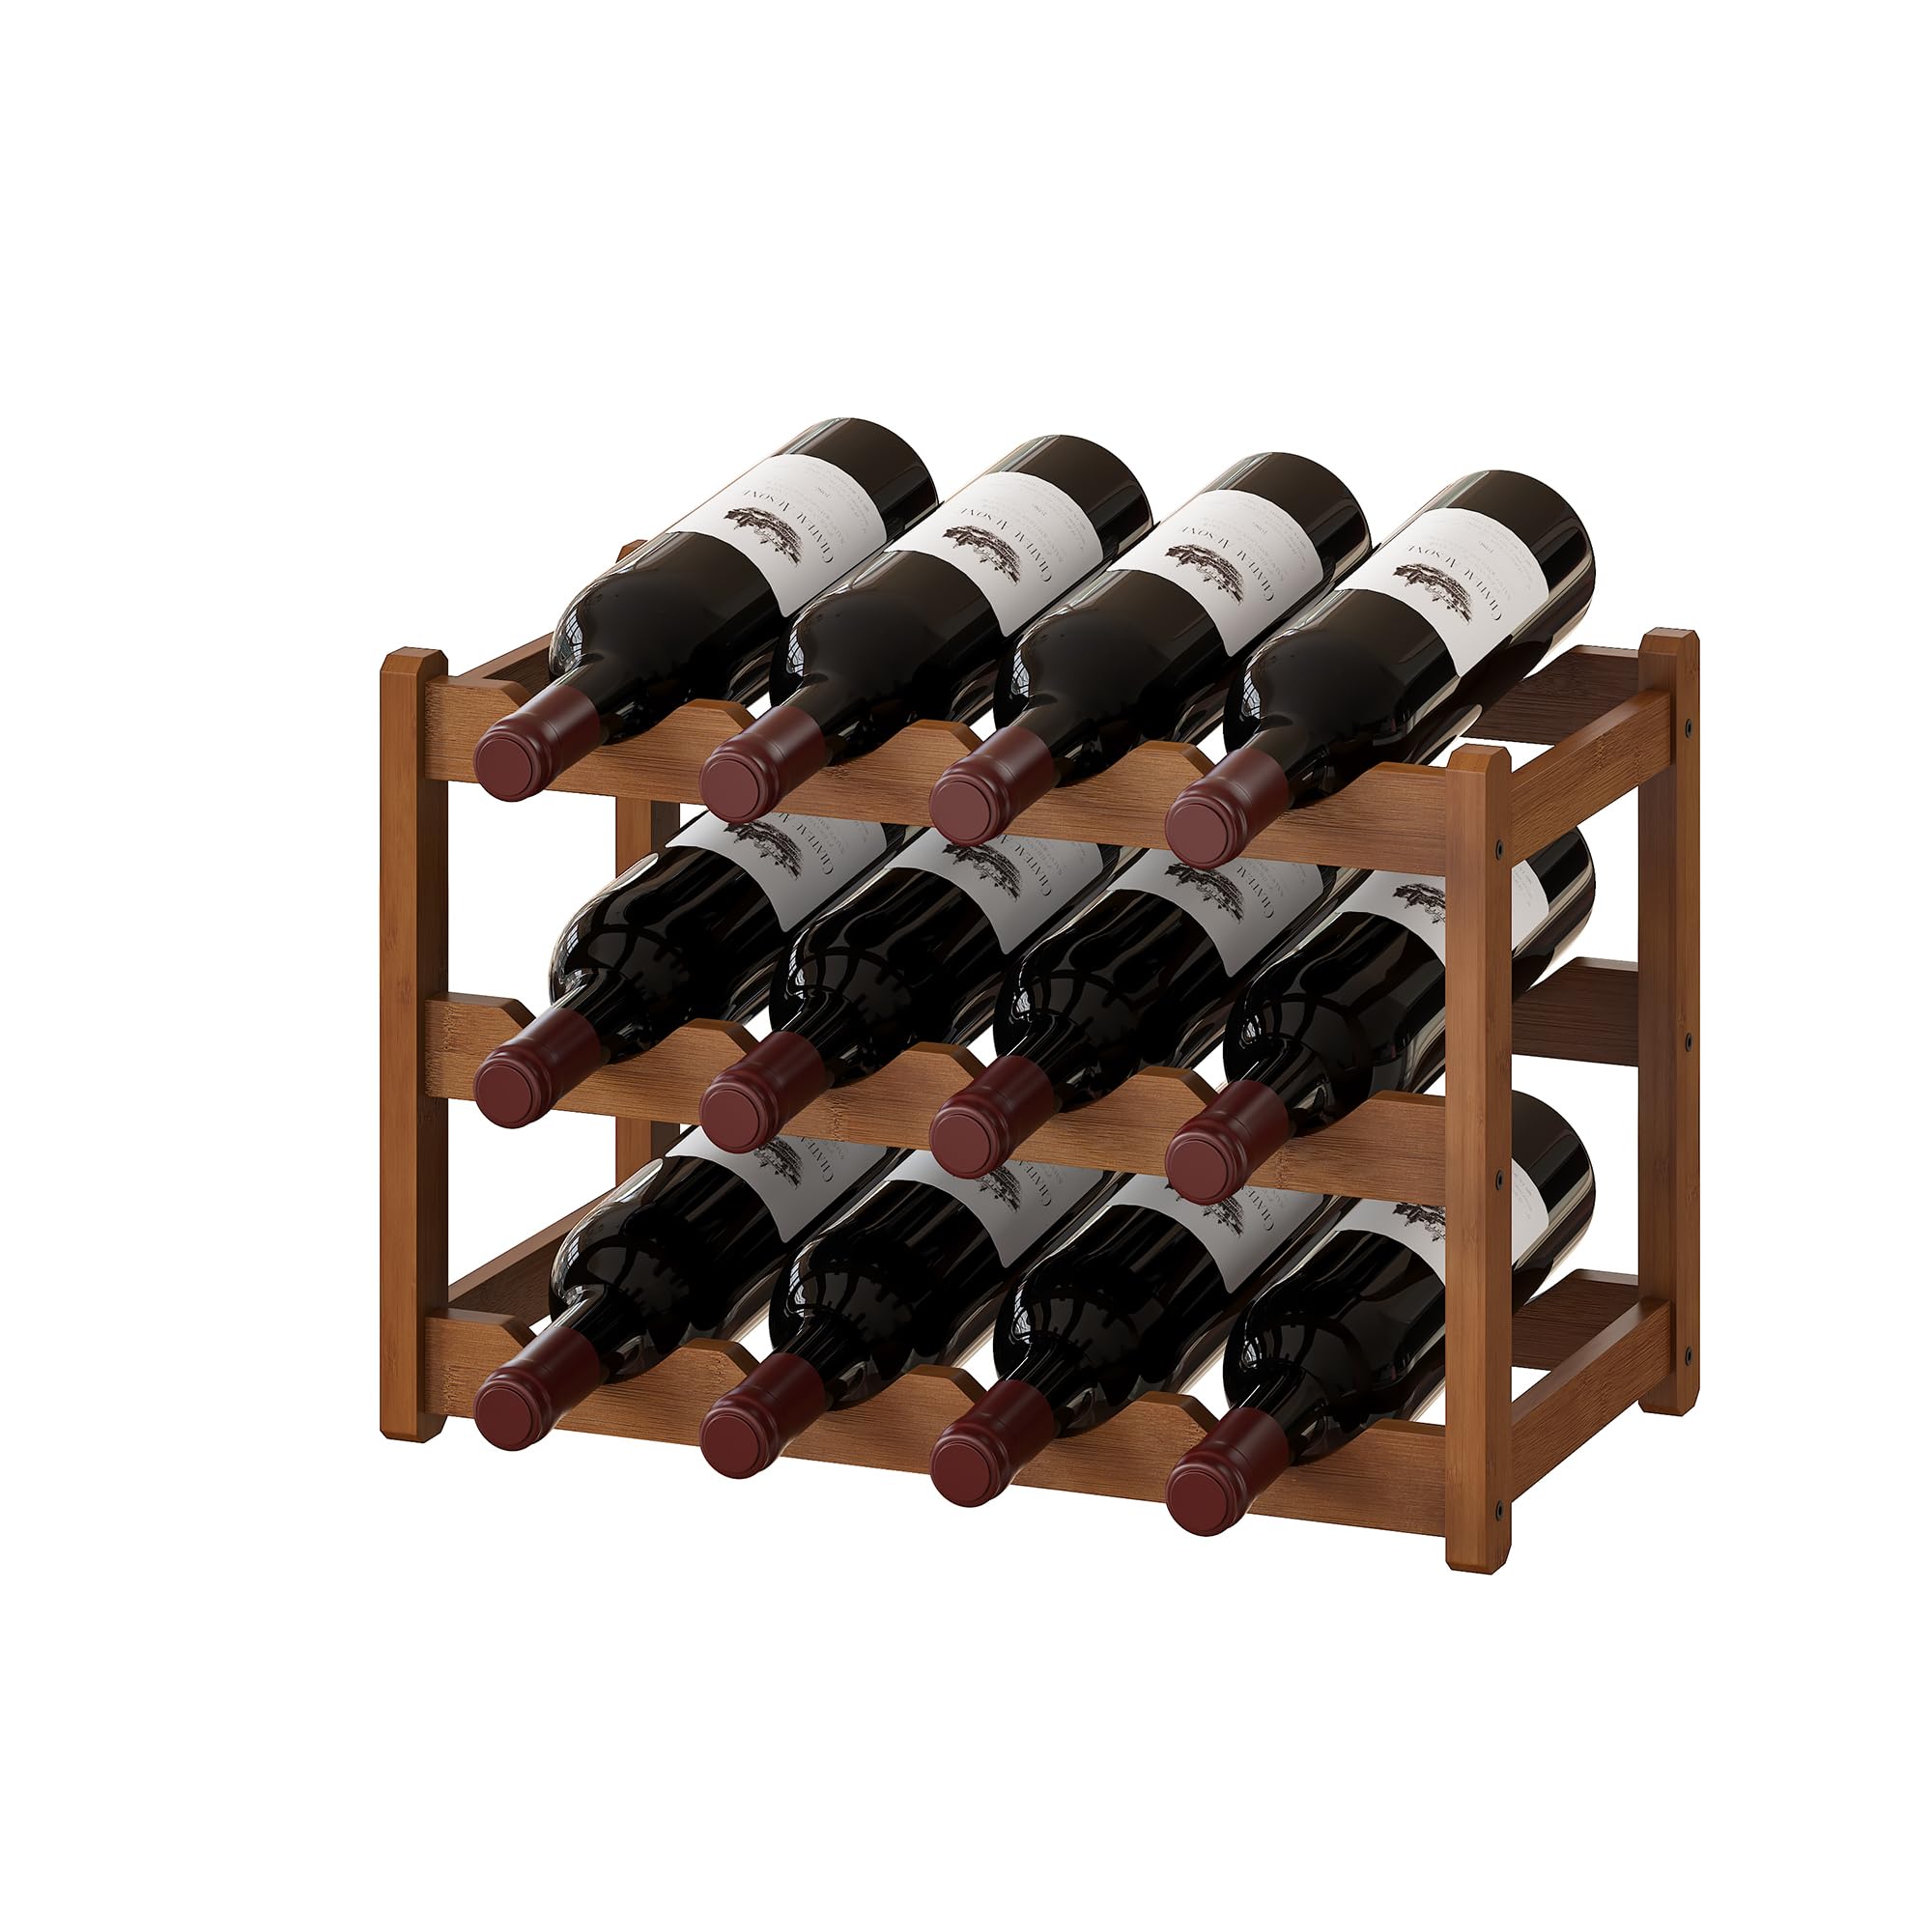 BMOSU Bamboo 3-Tier Wine Rack